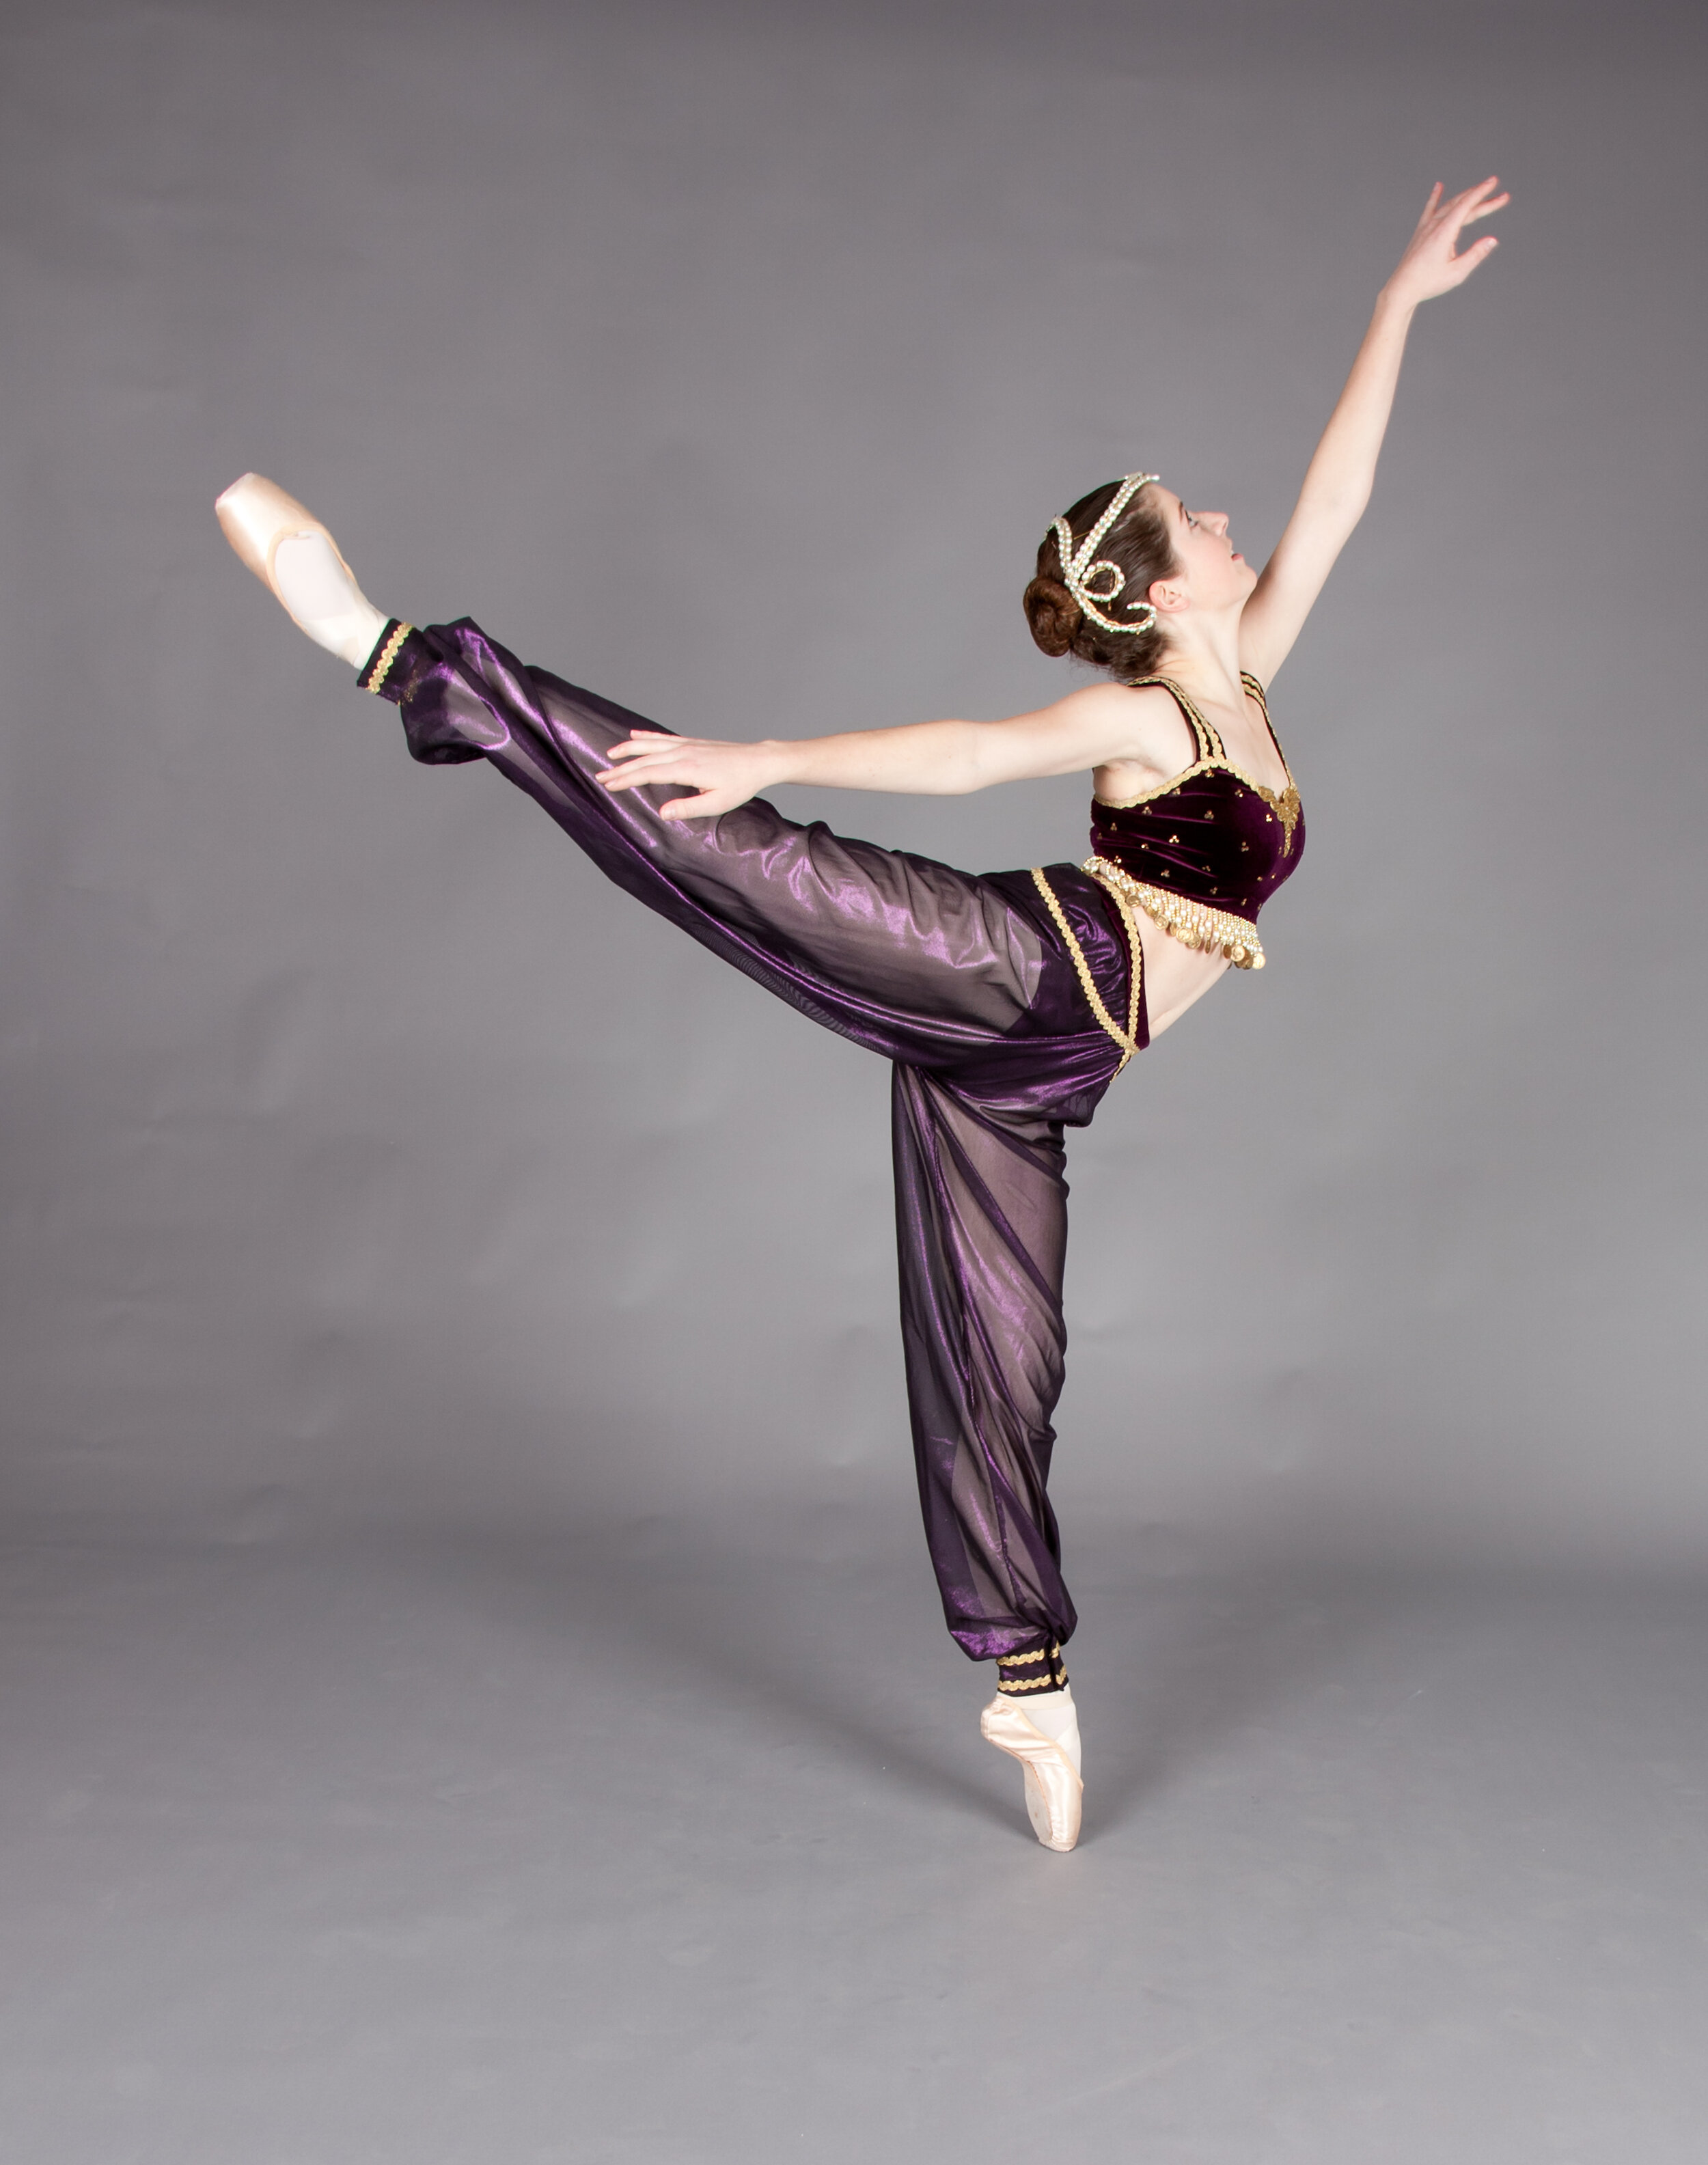 Arabian nutcracker arabesque-indianapolis dance photographer.jpg